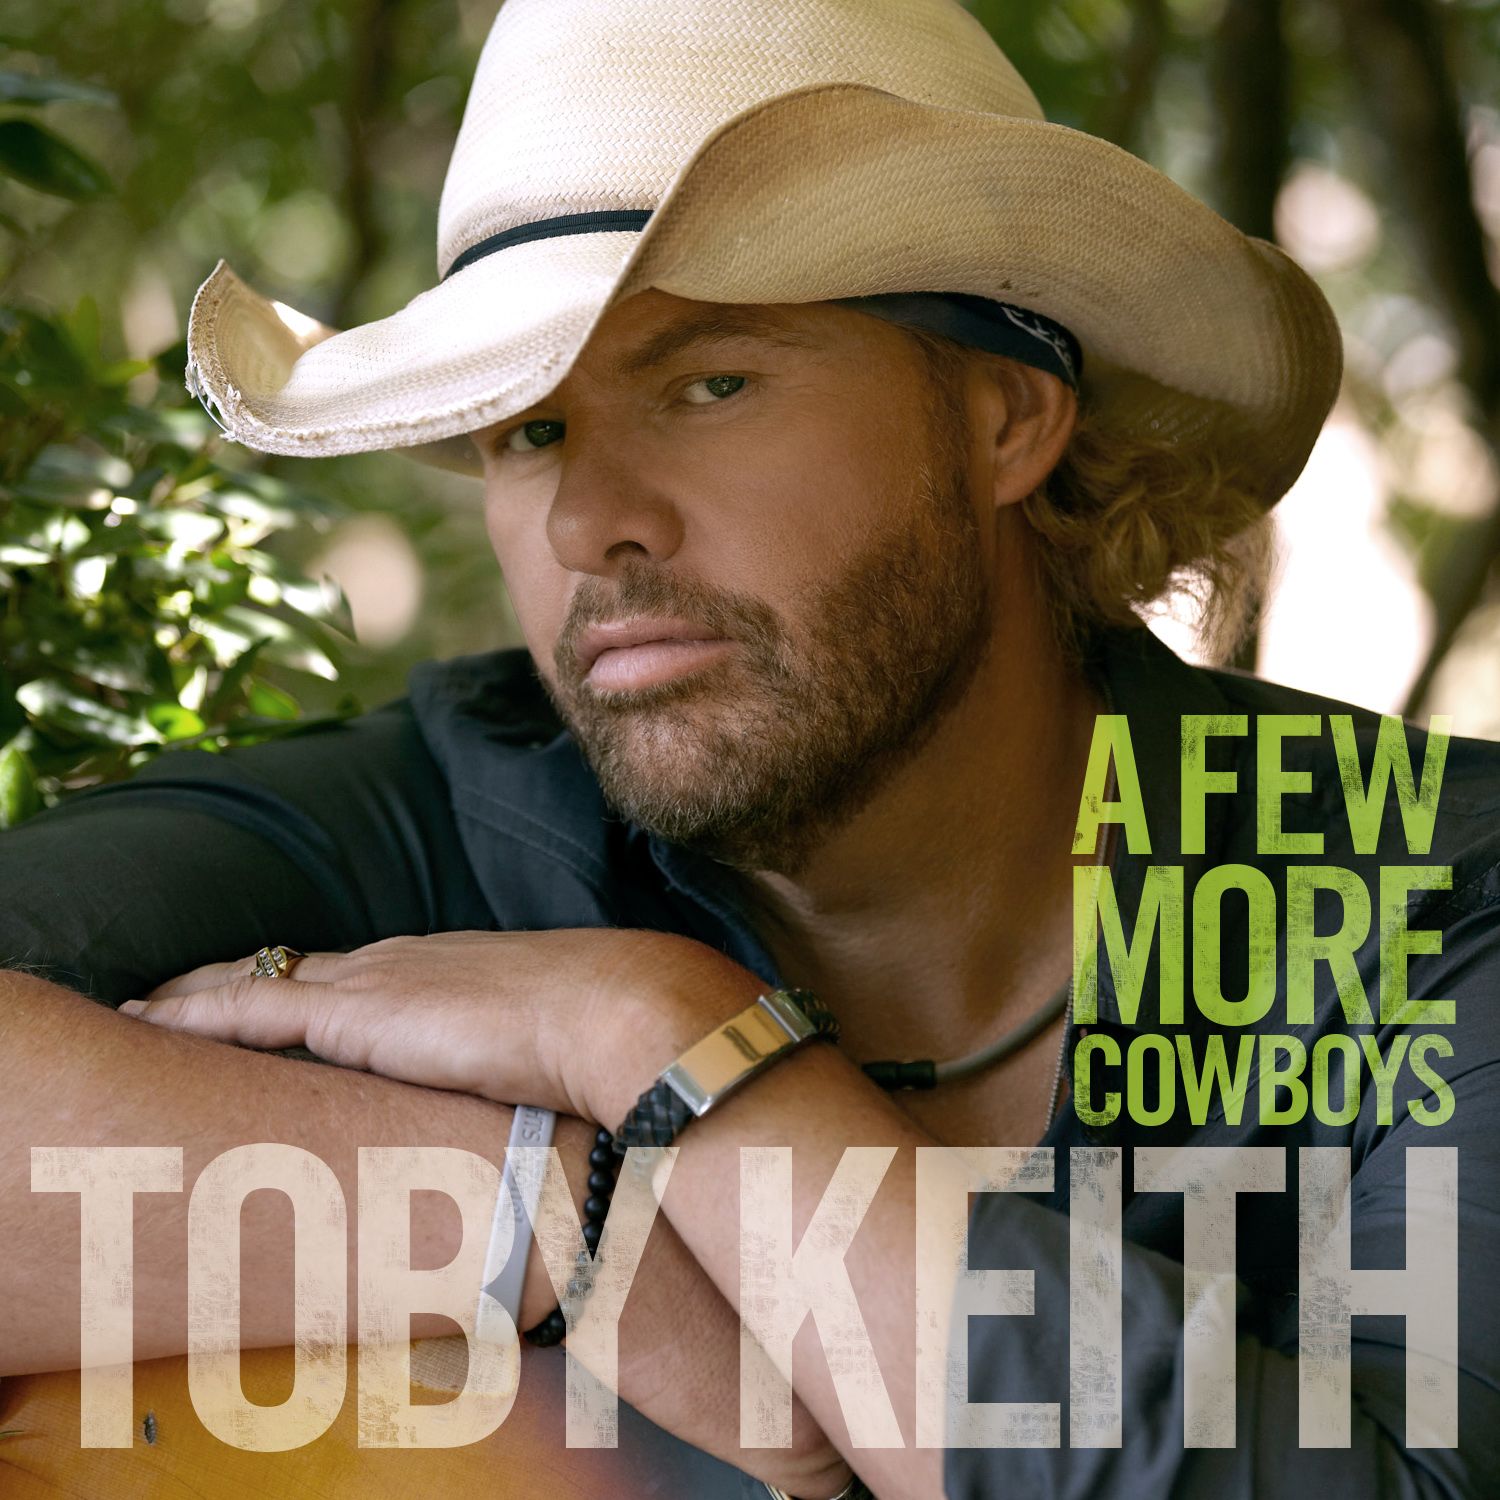 Toby Keith Sending Fans, Radio “A Few More Cowboys”